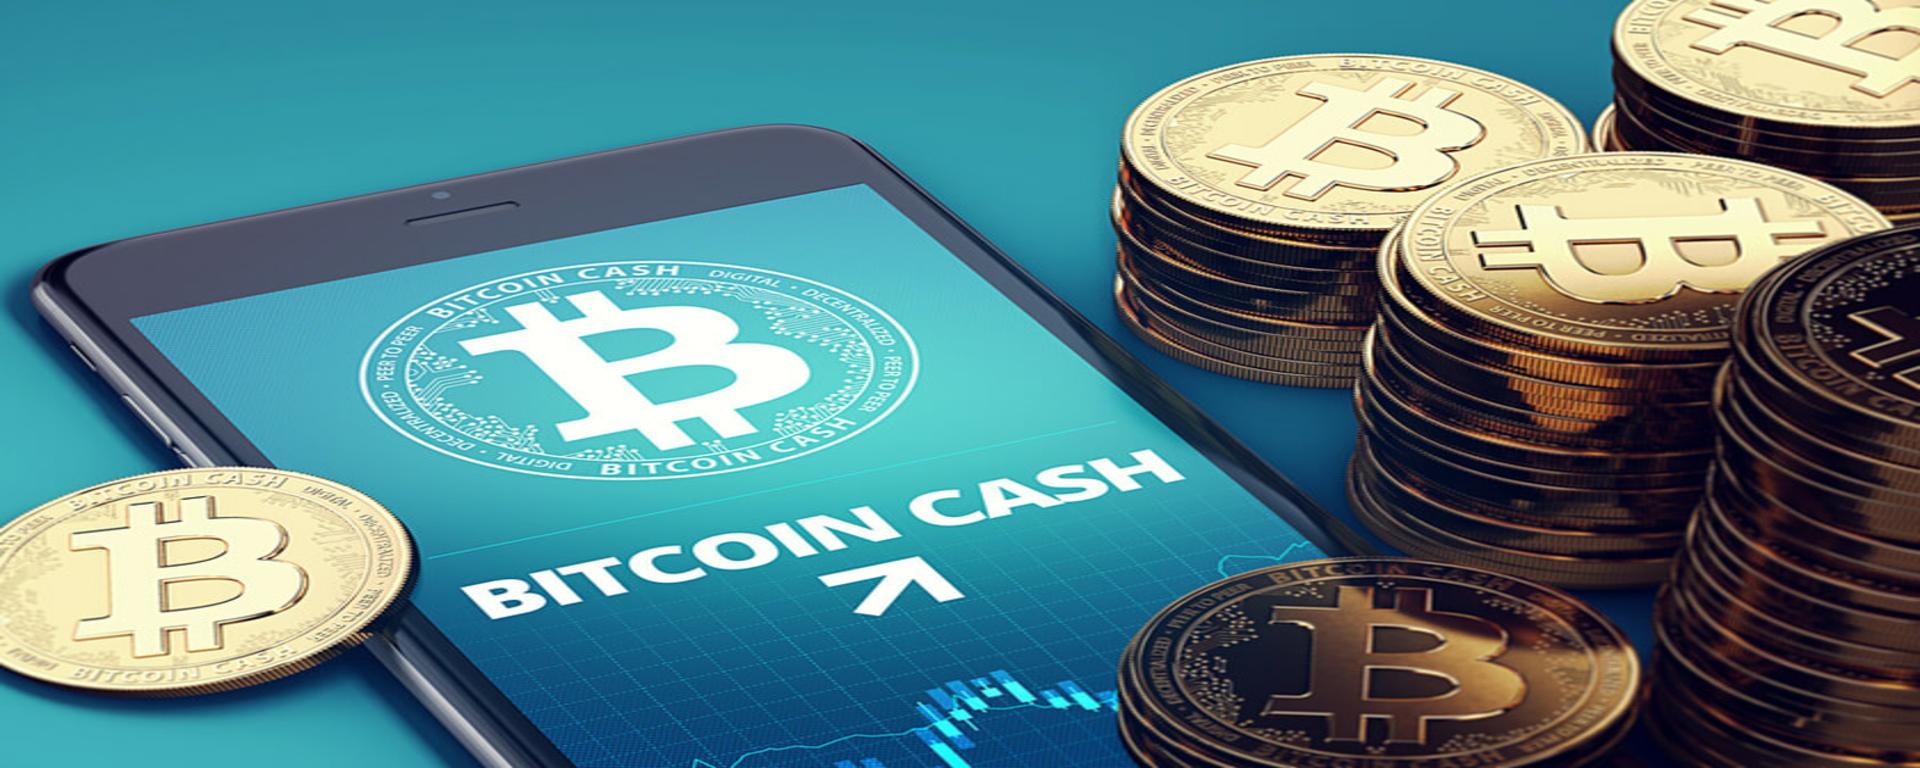 coinbase buy bitcoin with usd wallet